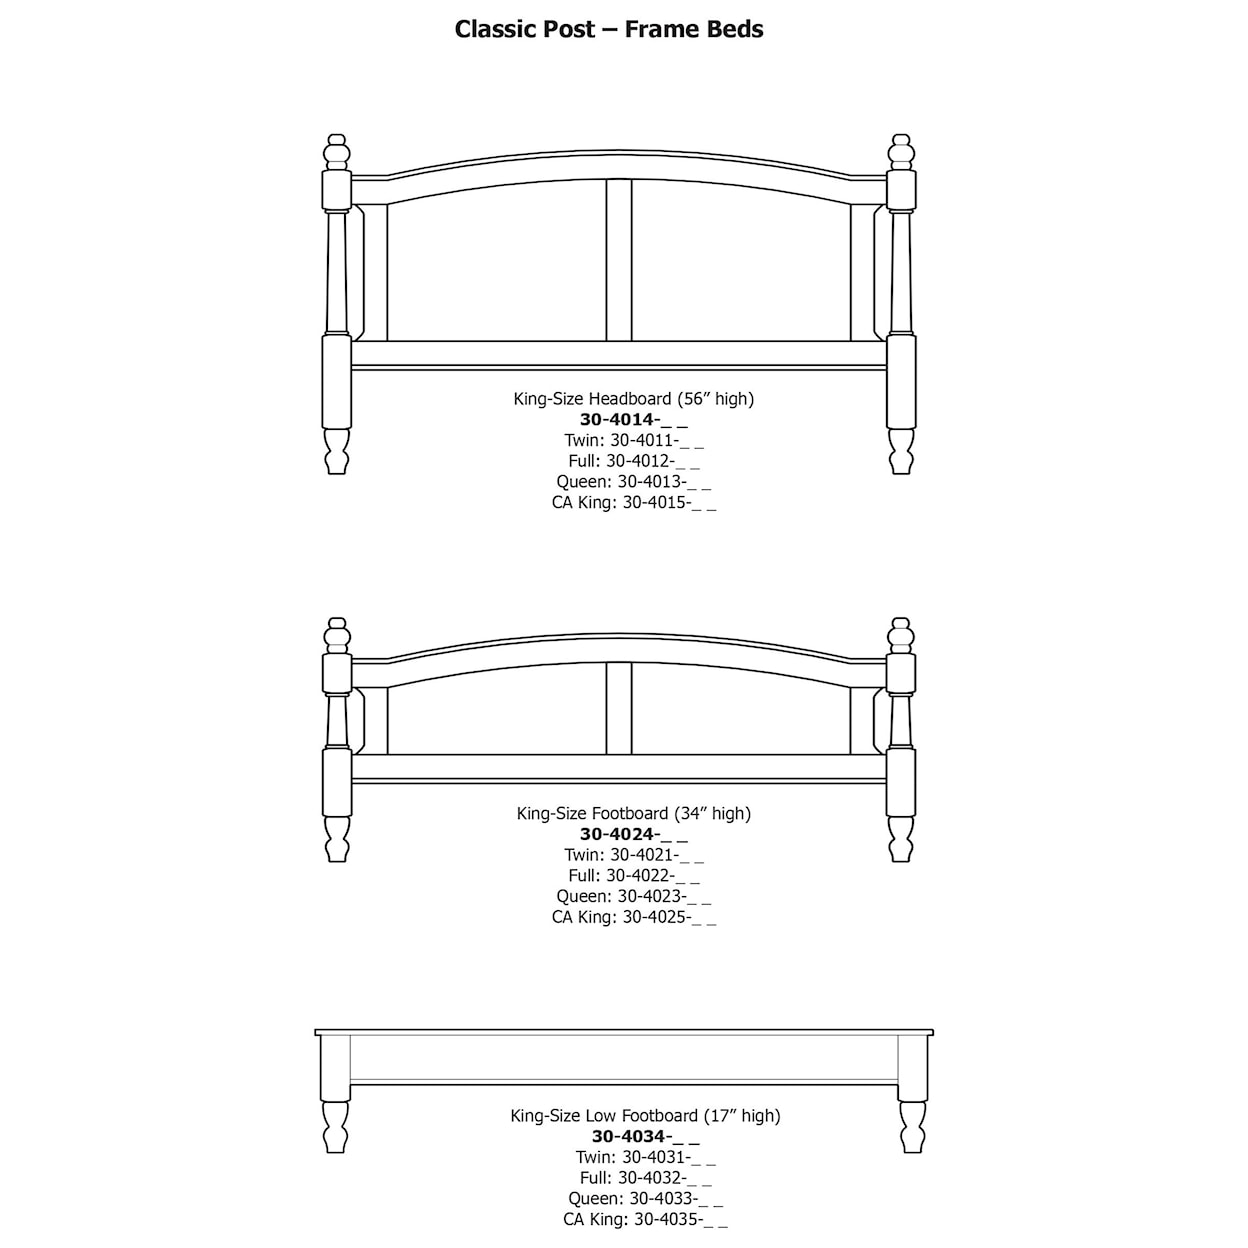 Daniel's Amish Classic Cal King Pedestal Bed W/ Storage Drawer